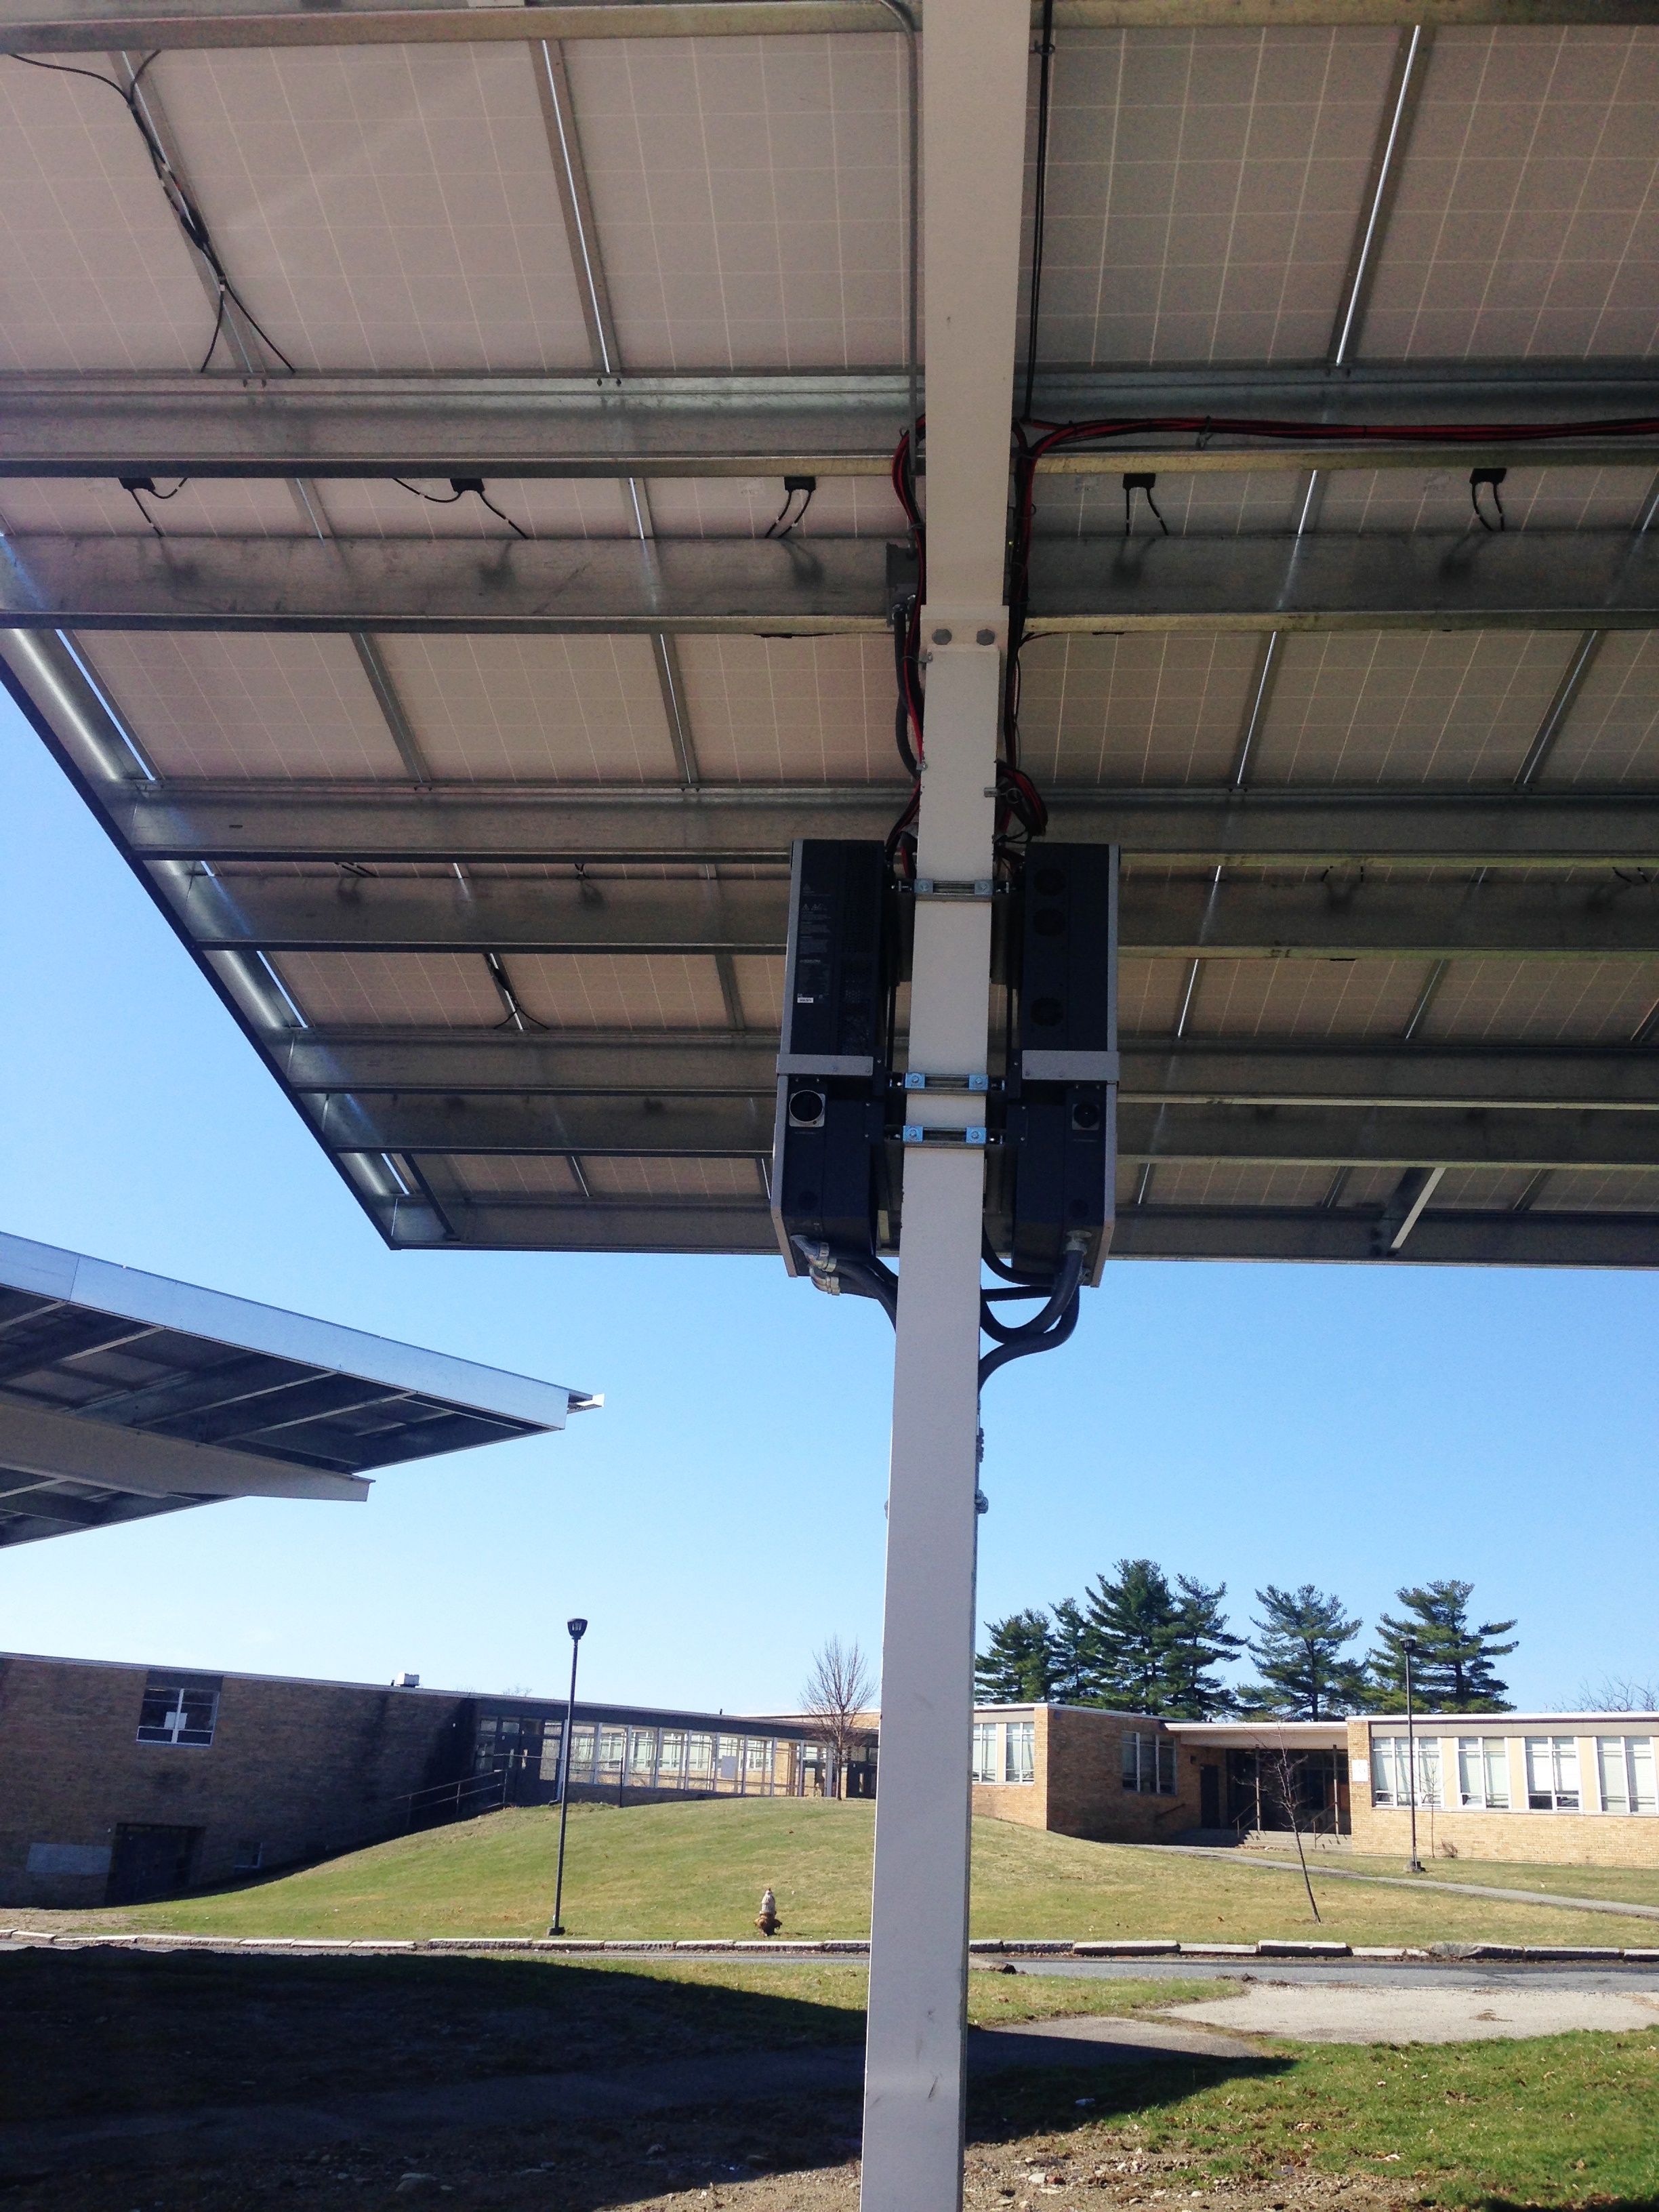 Burncoat High School's solar parking canopy